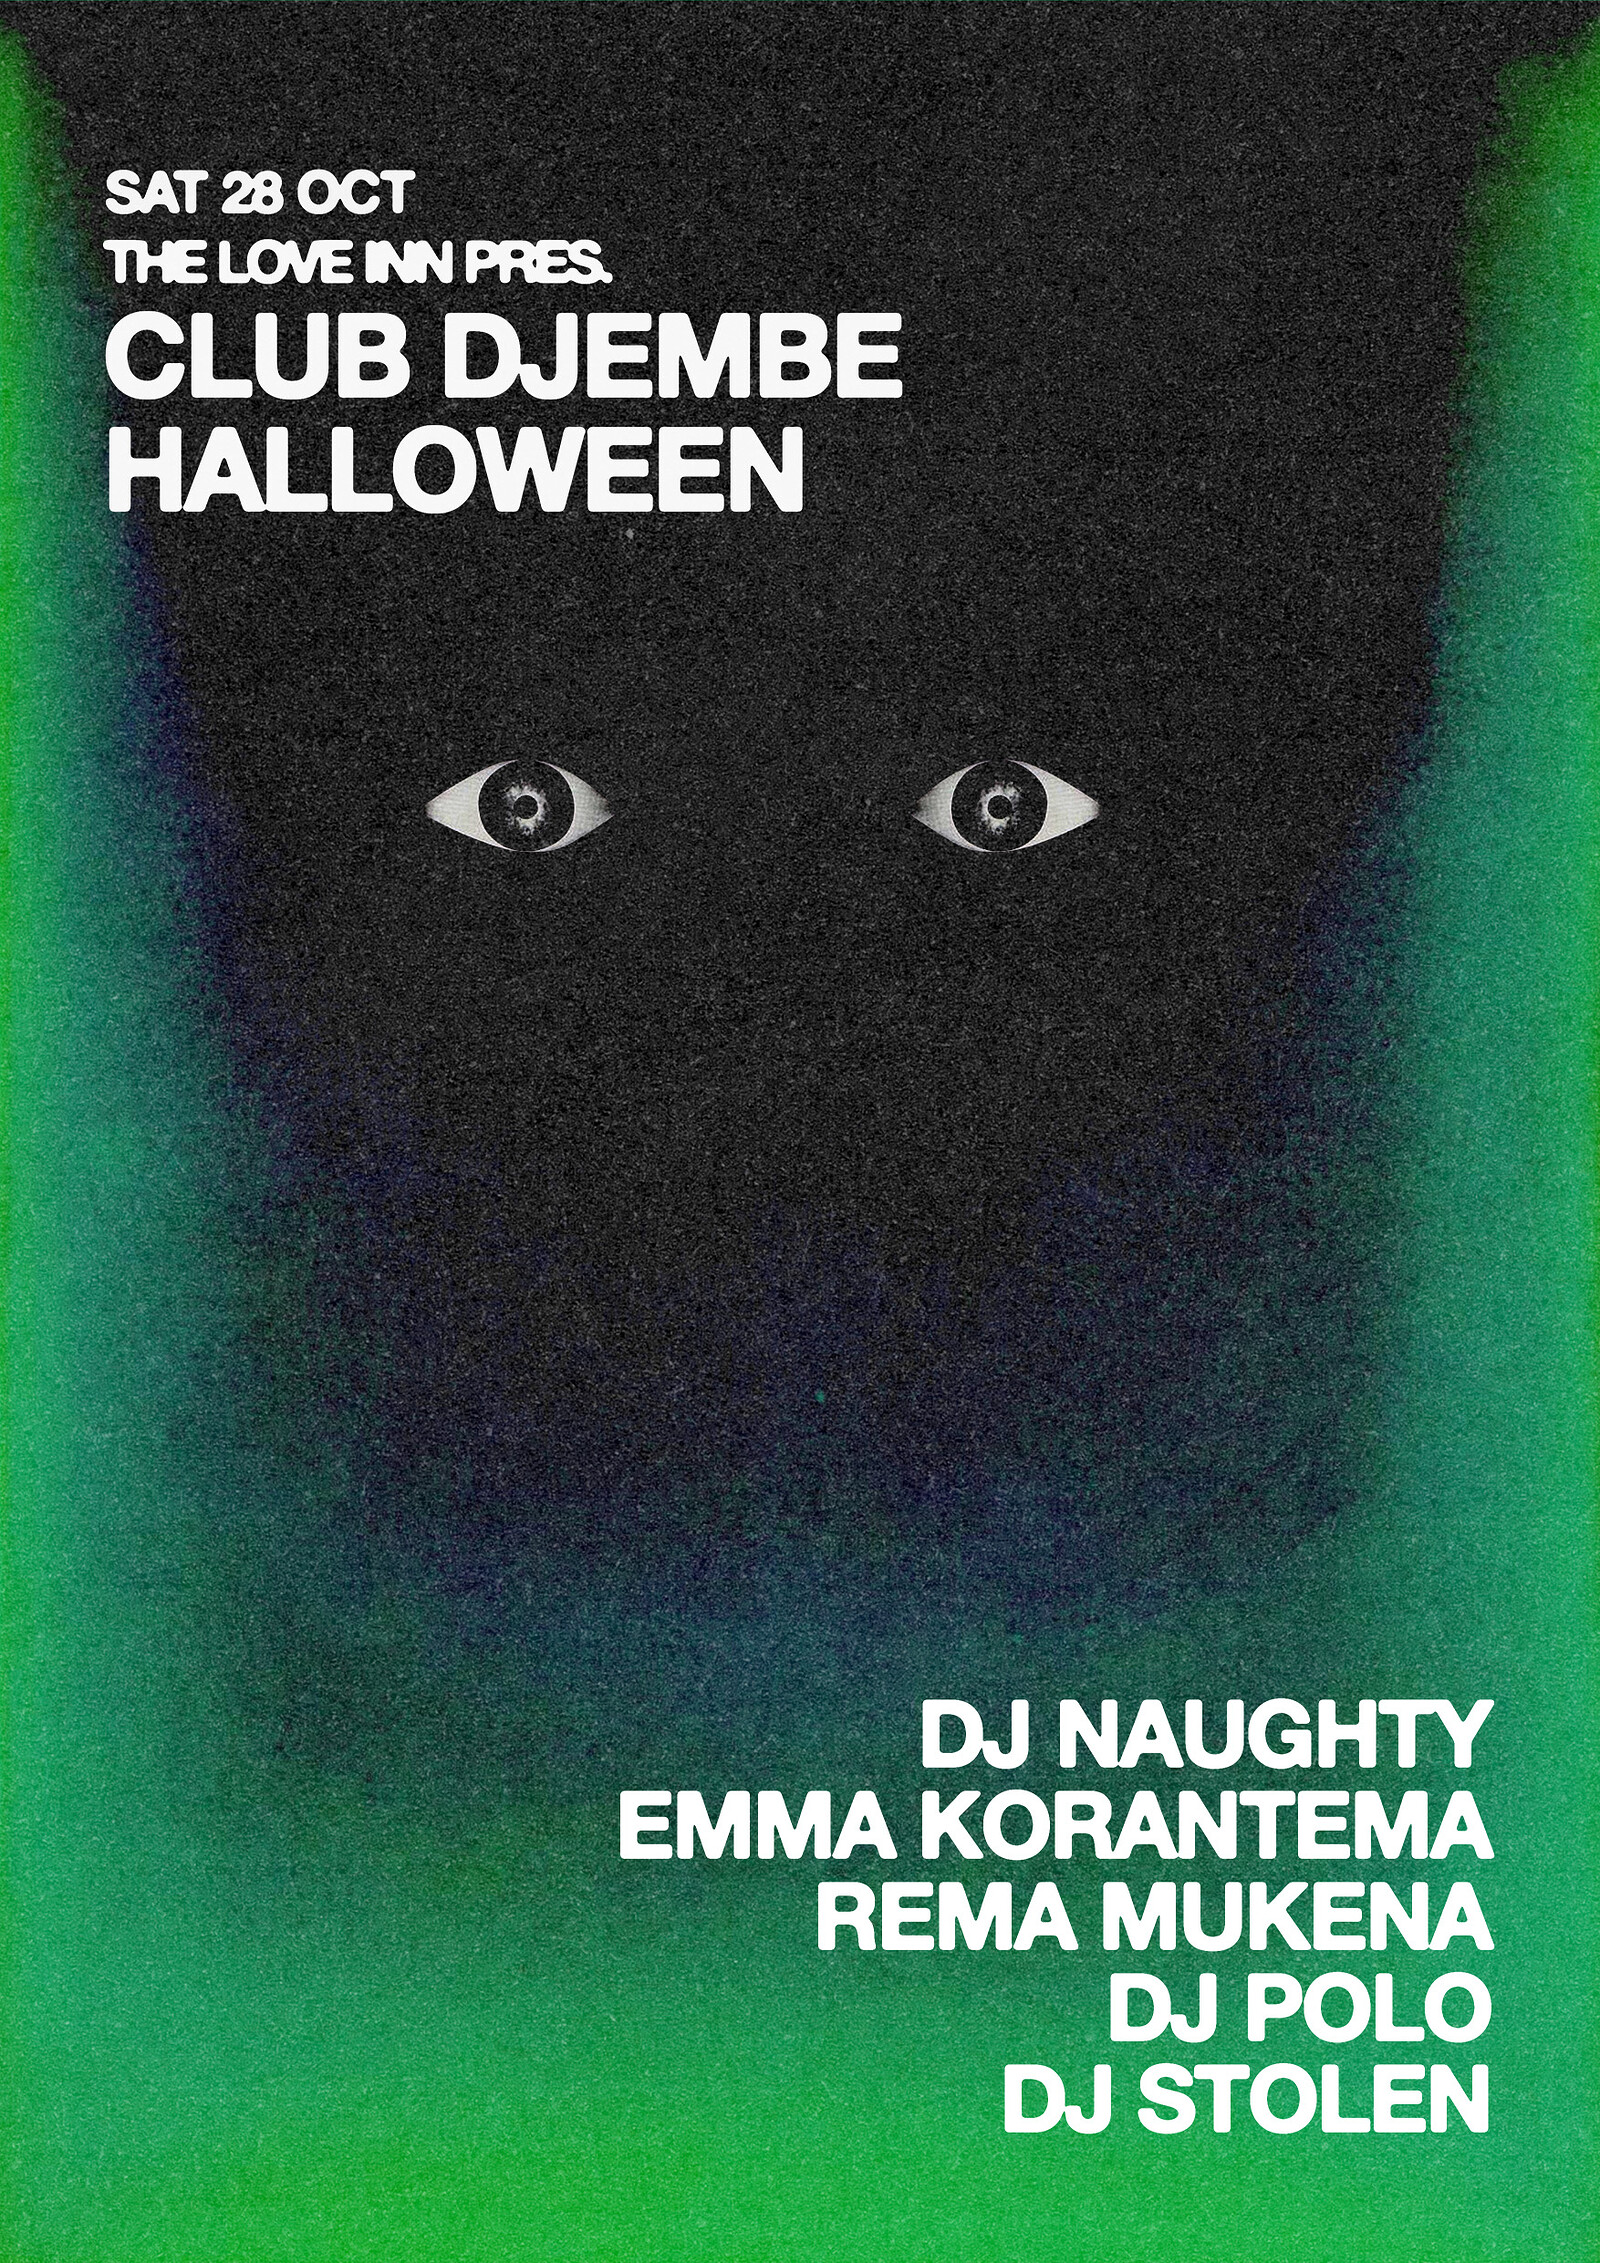 Club Djembe w/ Emma Korantema + DJ Naughty at The Love Inn